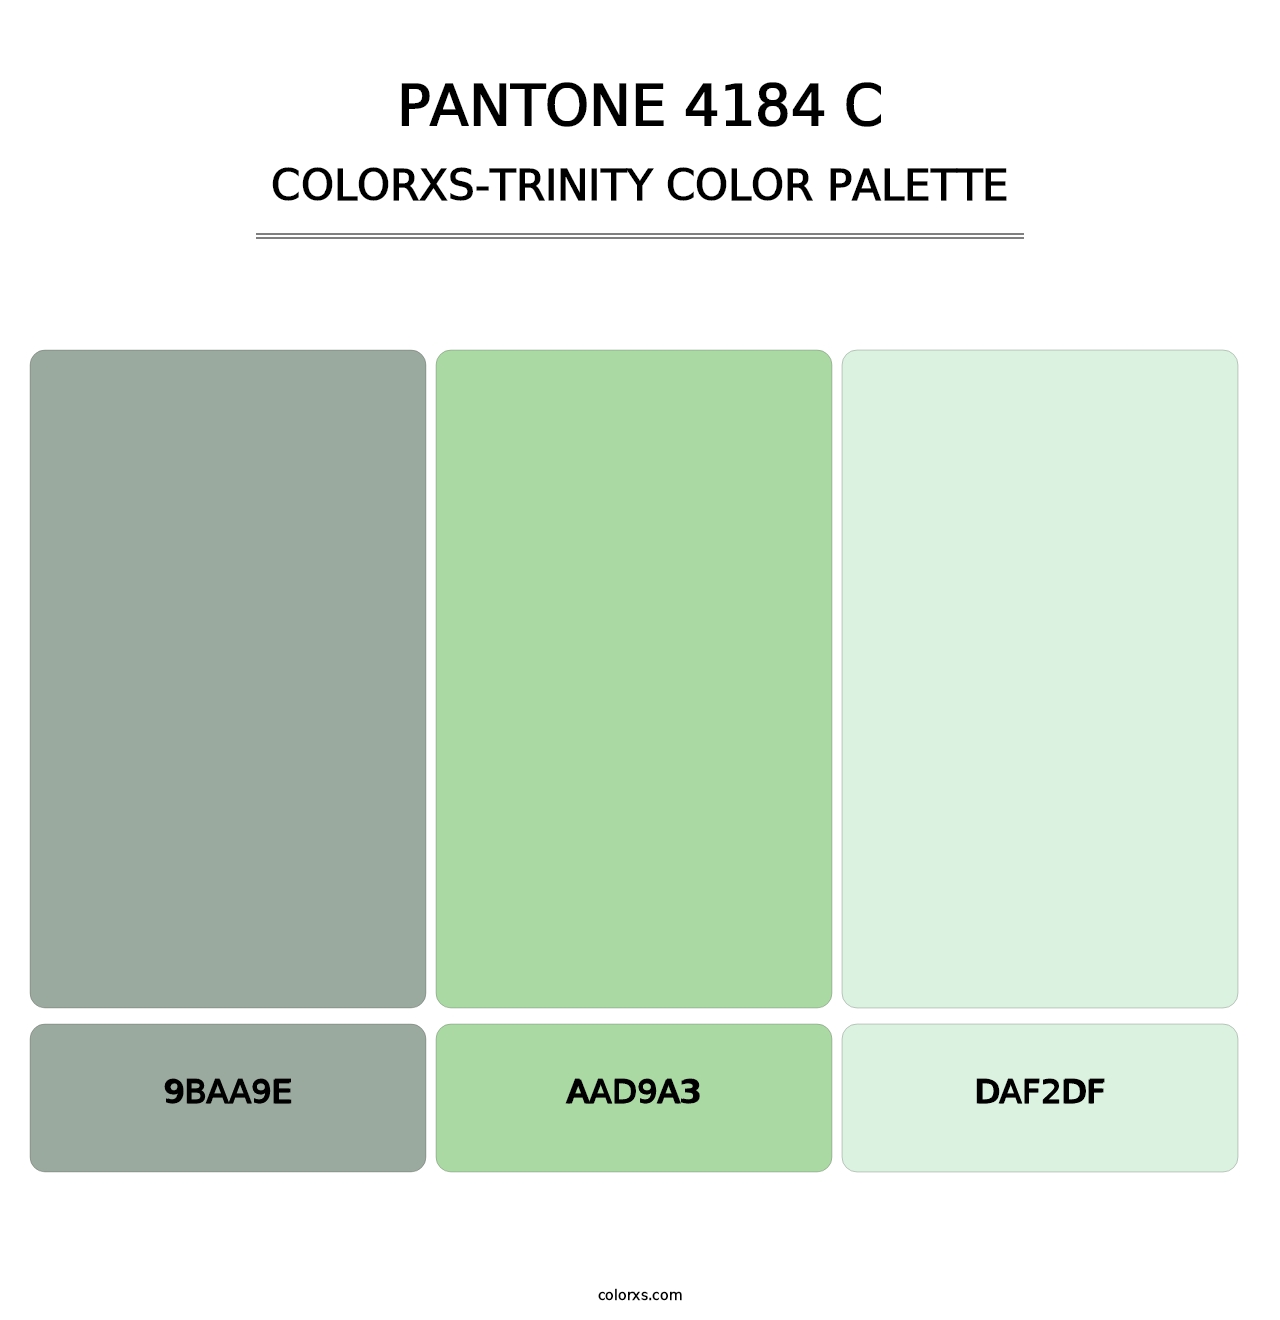 PANTONE 4184 C - Colorxs Trinity Palette